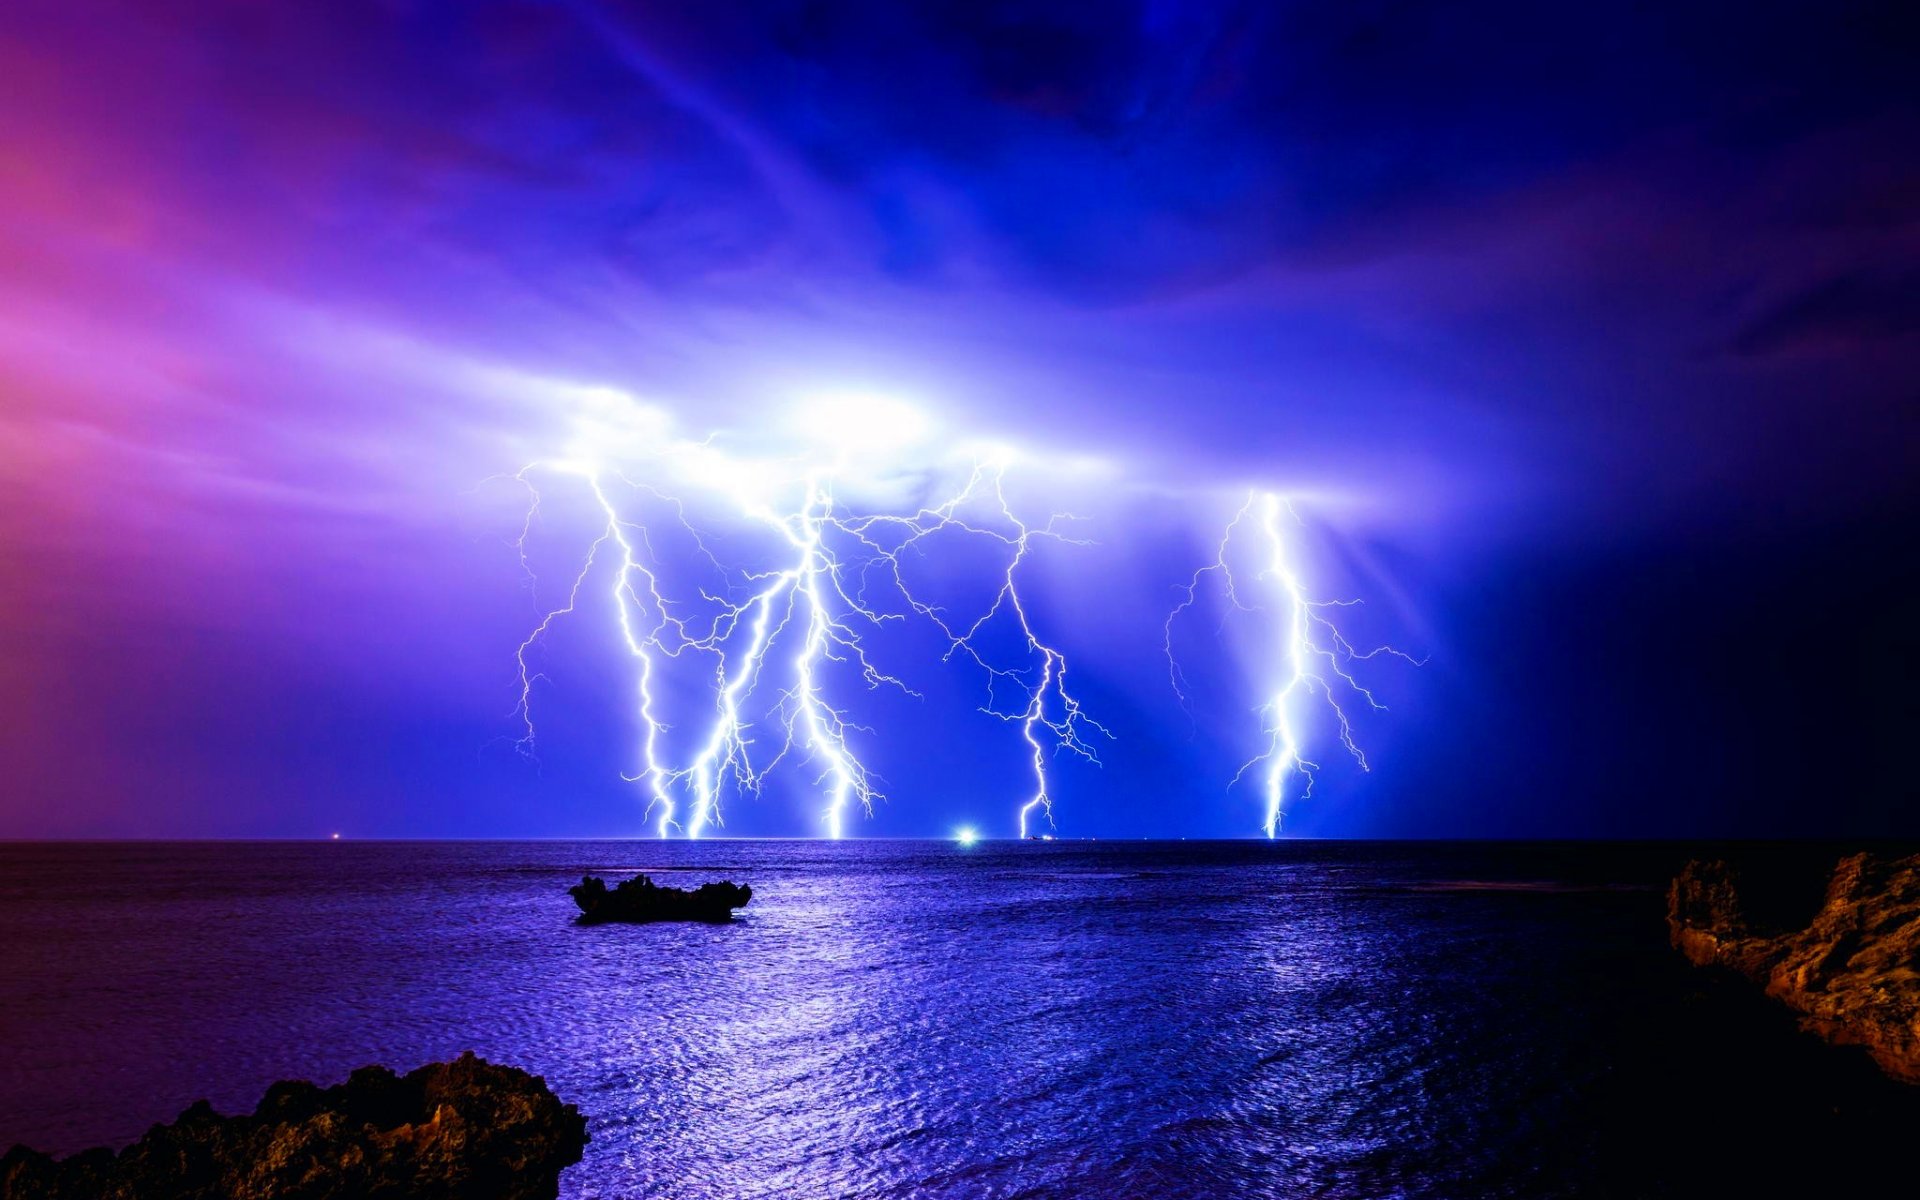 lightning, Storm, Rain, Clouds, Sky, Nature, Thunderstorm Wallpapers HD